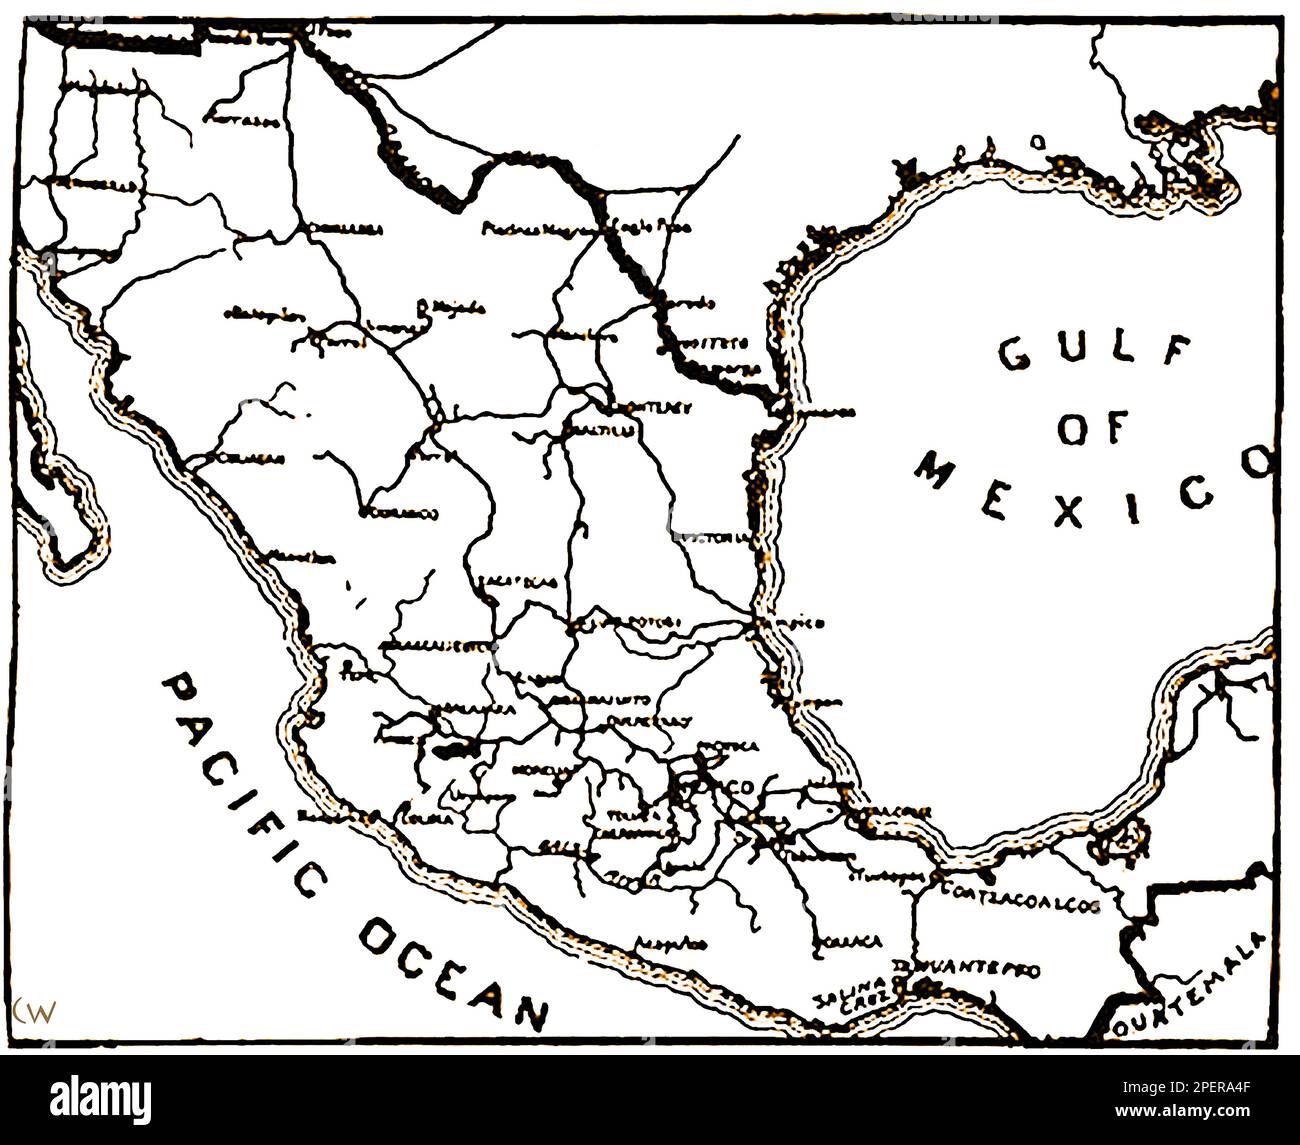 Eine 1892-Karte, die die Eisenbahnen Mexikos so zeigt, wie sie damals waren. -- UN Mapa de 1892 que muestra los ferrocarriles de México como eran en ese momento Stockfoto